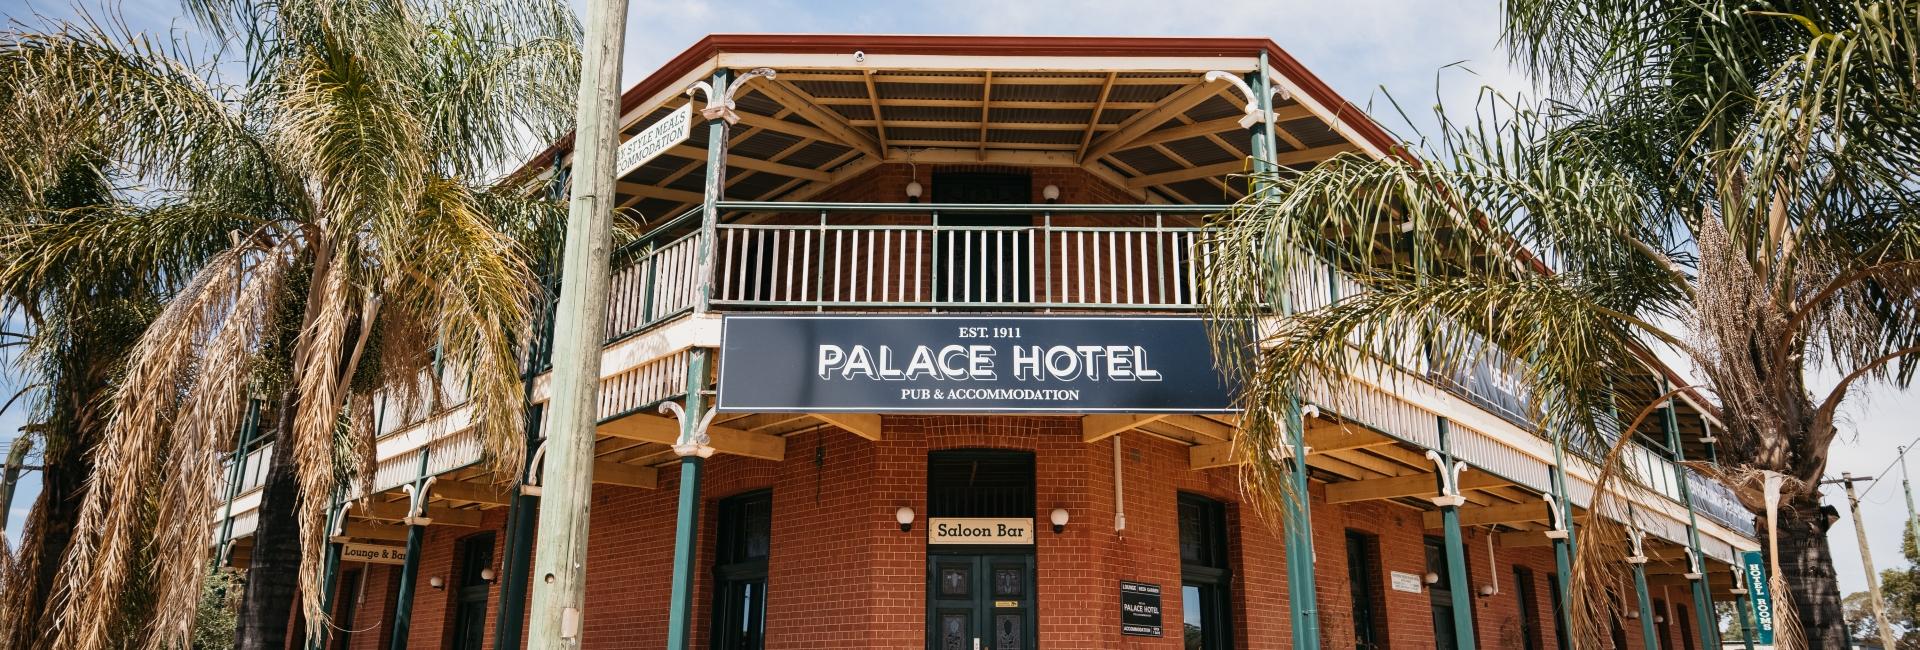 The Palace Hotel Southern Cross [image by Jarrad Seng]